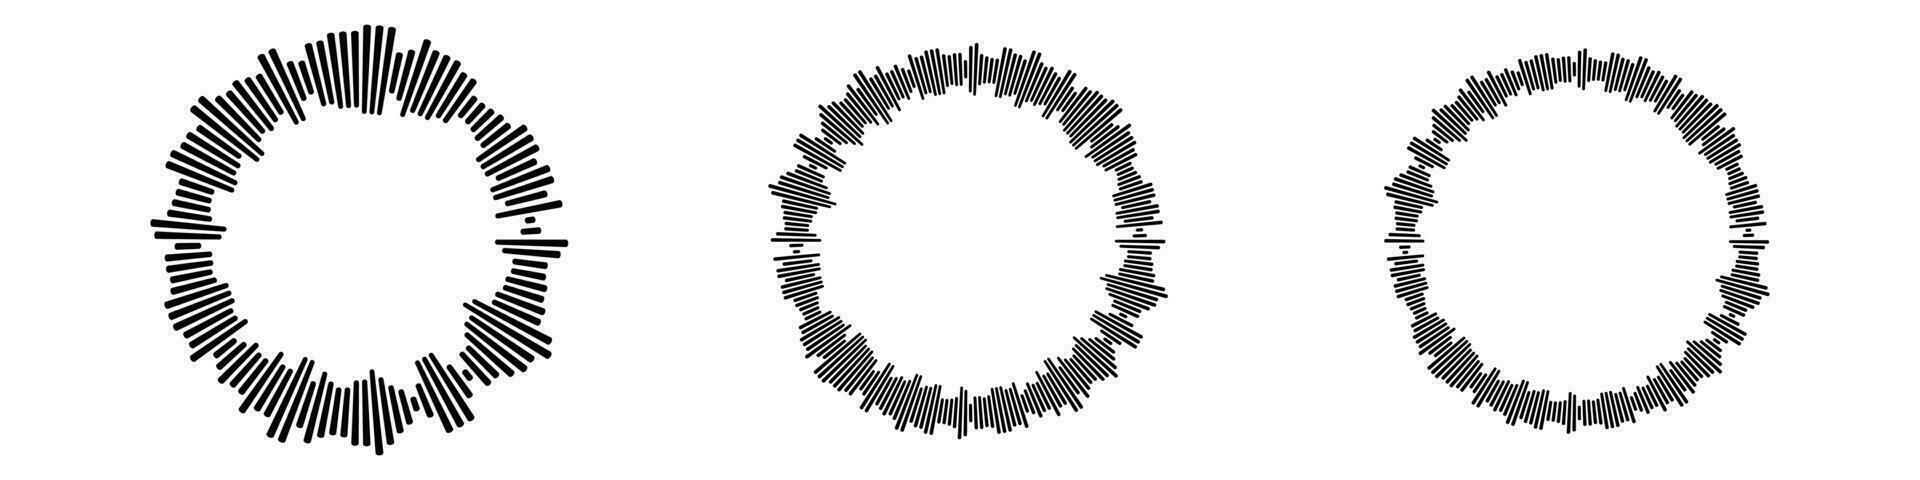 Kreis Audio- Wellen Satz. kreisförmig Musik- Klang Grafik Design Sammlung. runden Klang und radial Radio equalizer.vector isoliert Illustration vektor